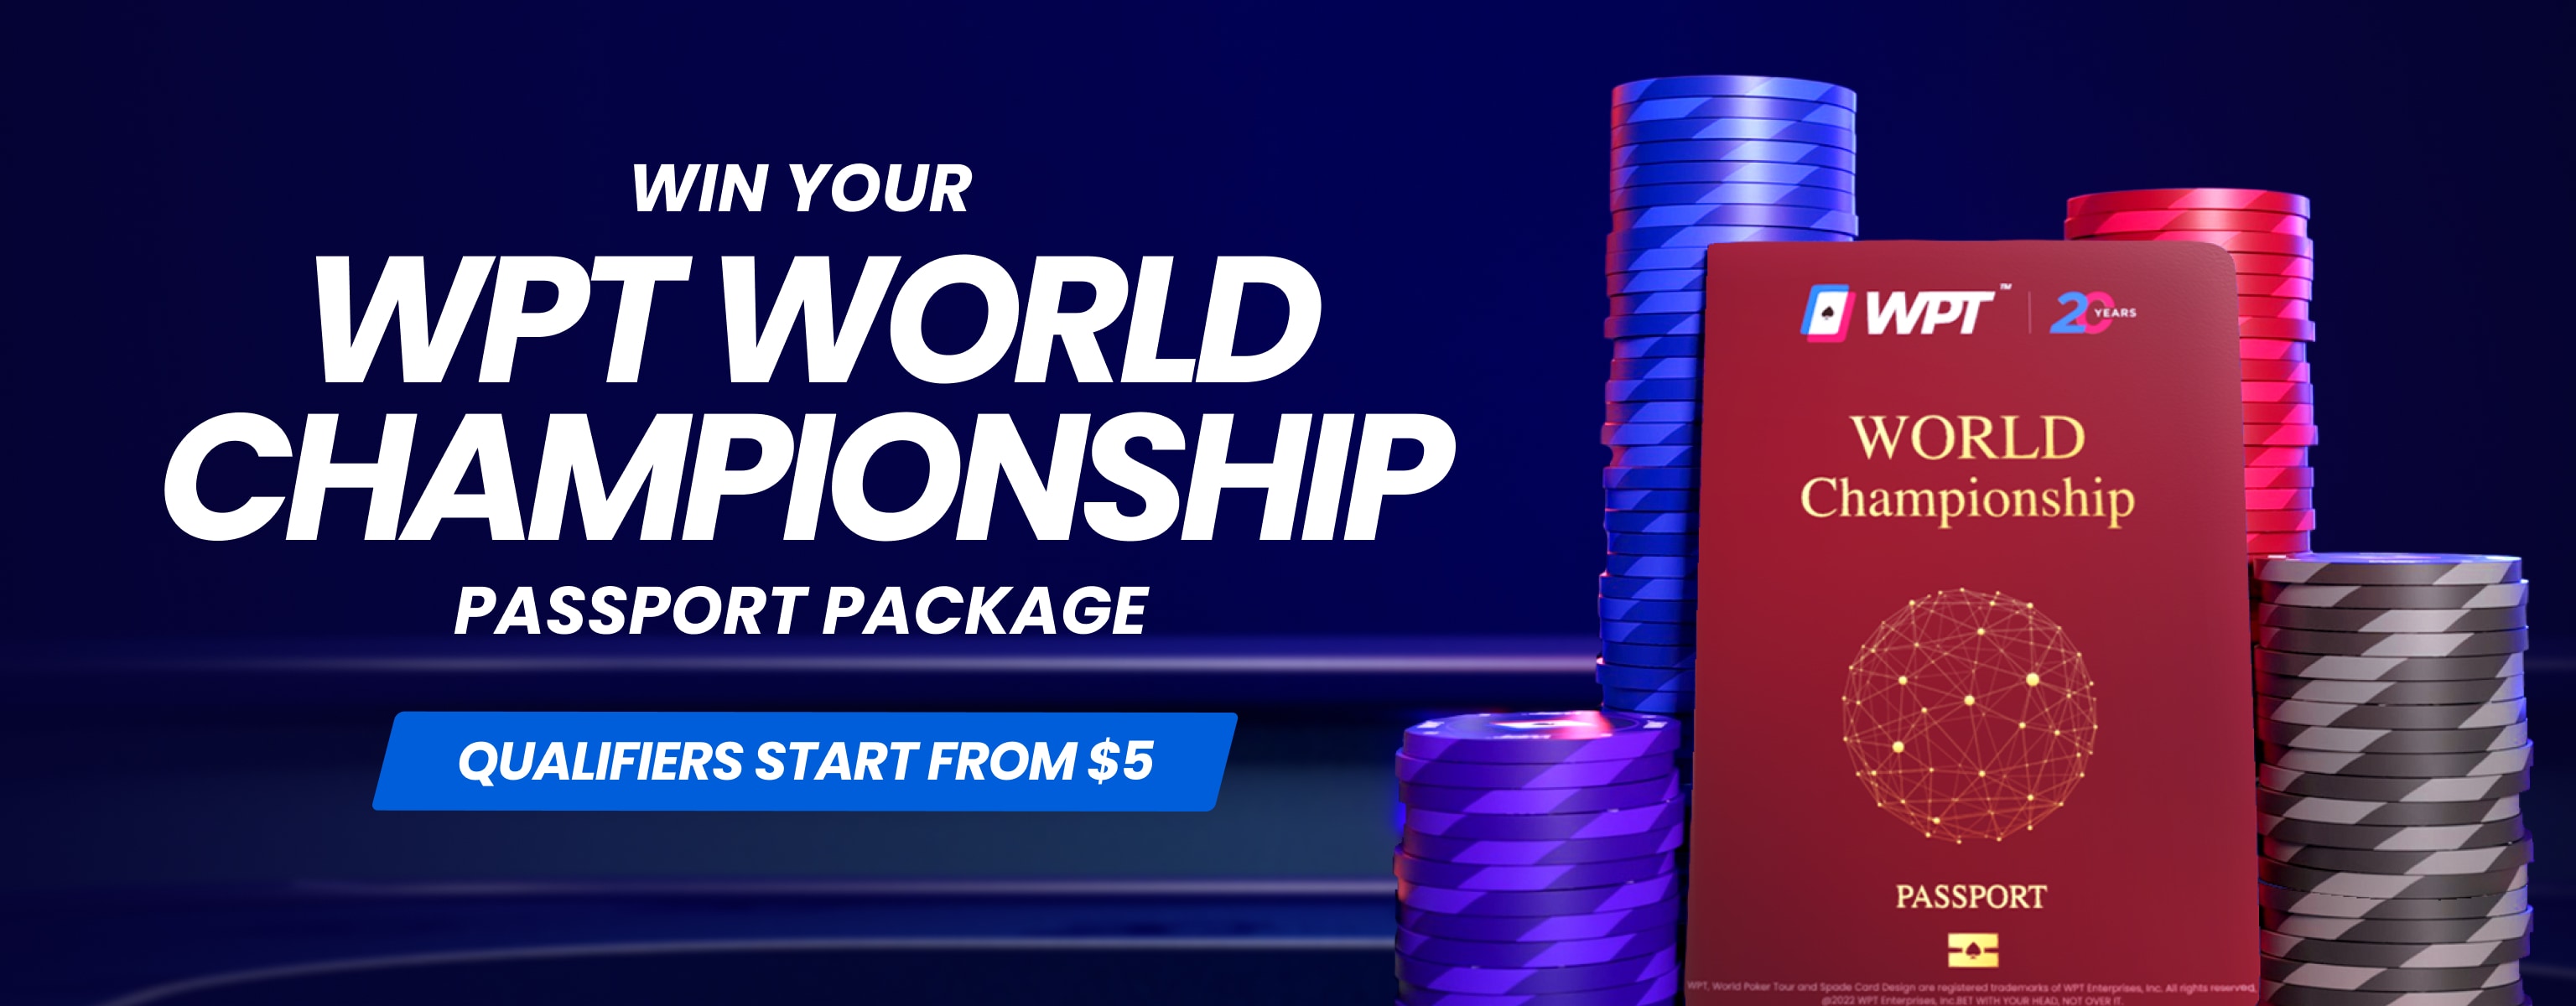 WPT Global Hosting Satellites to December’s WPT World Championship